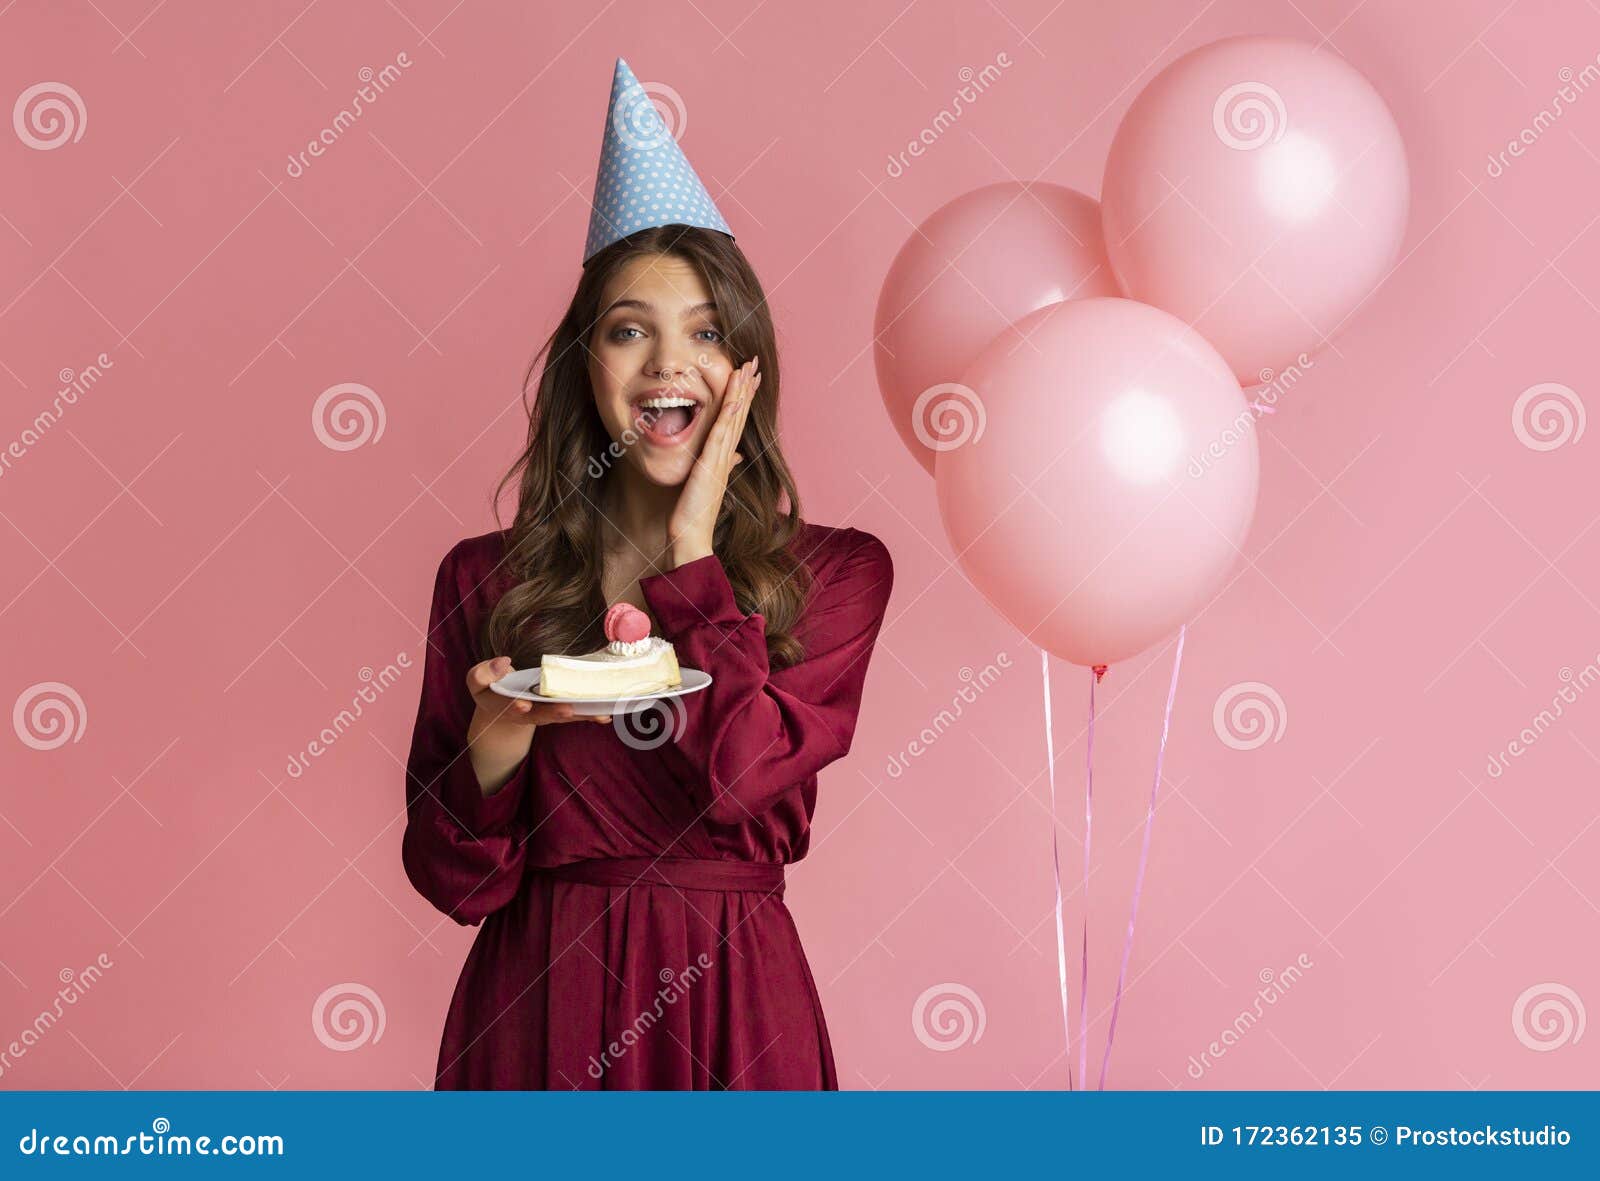 Pinterest | 21st birthday photoshoot, Cute birthday pictures, Birthday  photoshoot